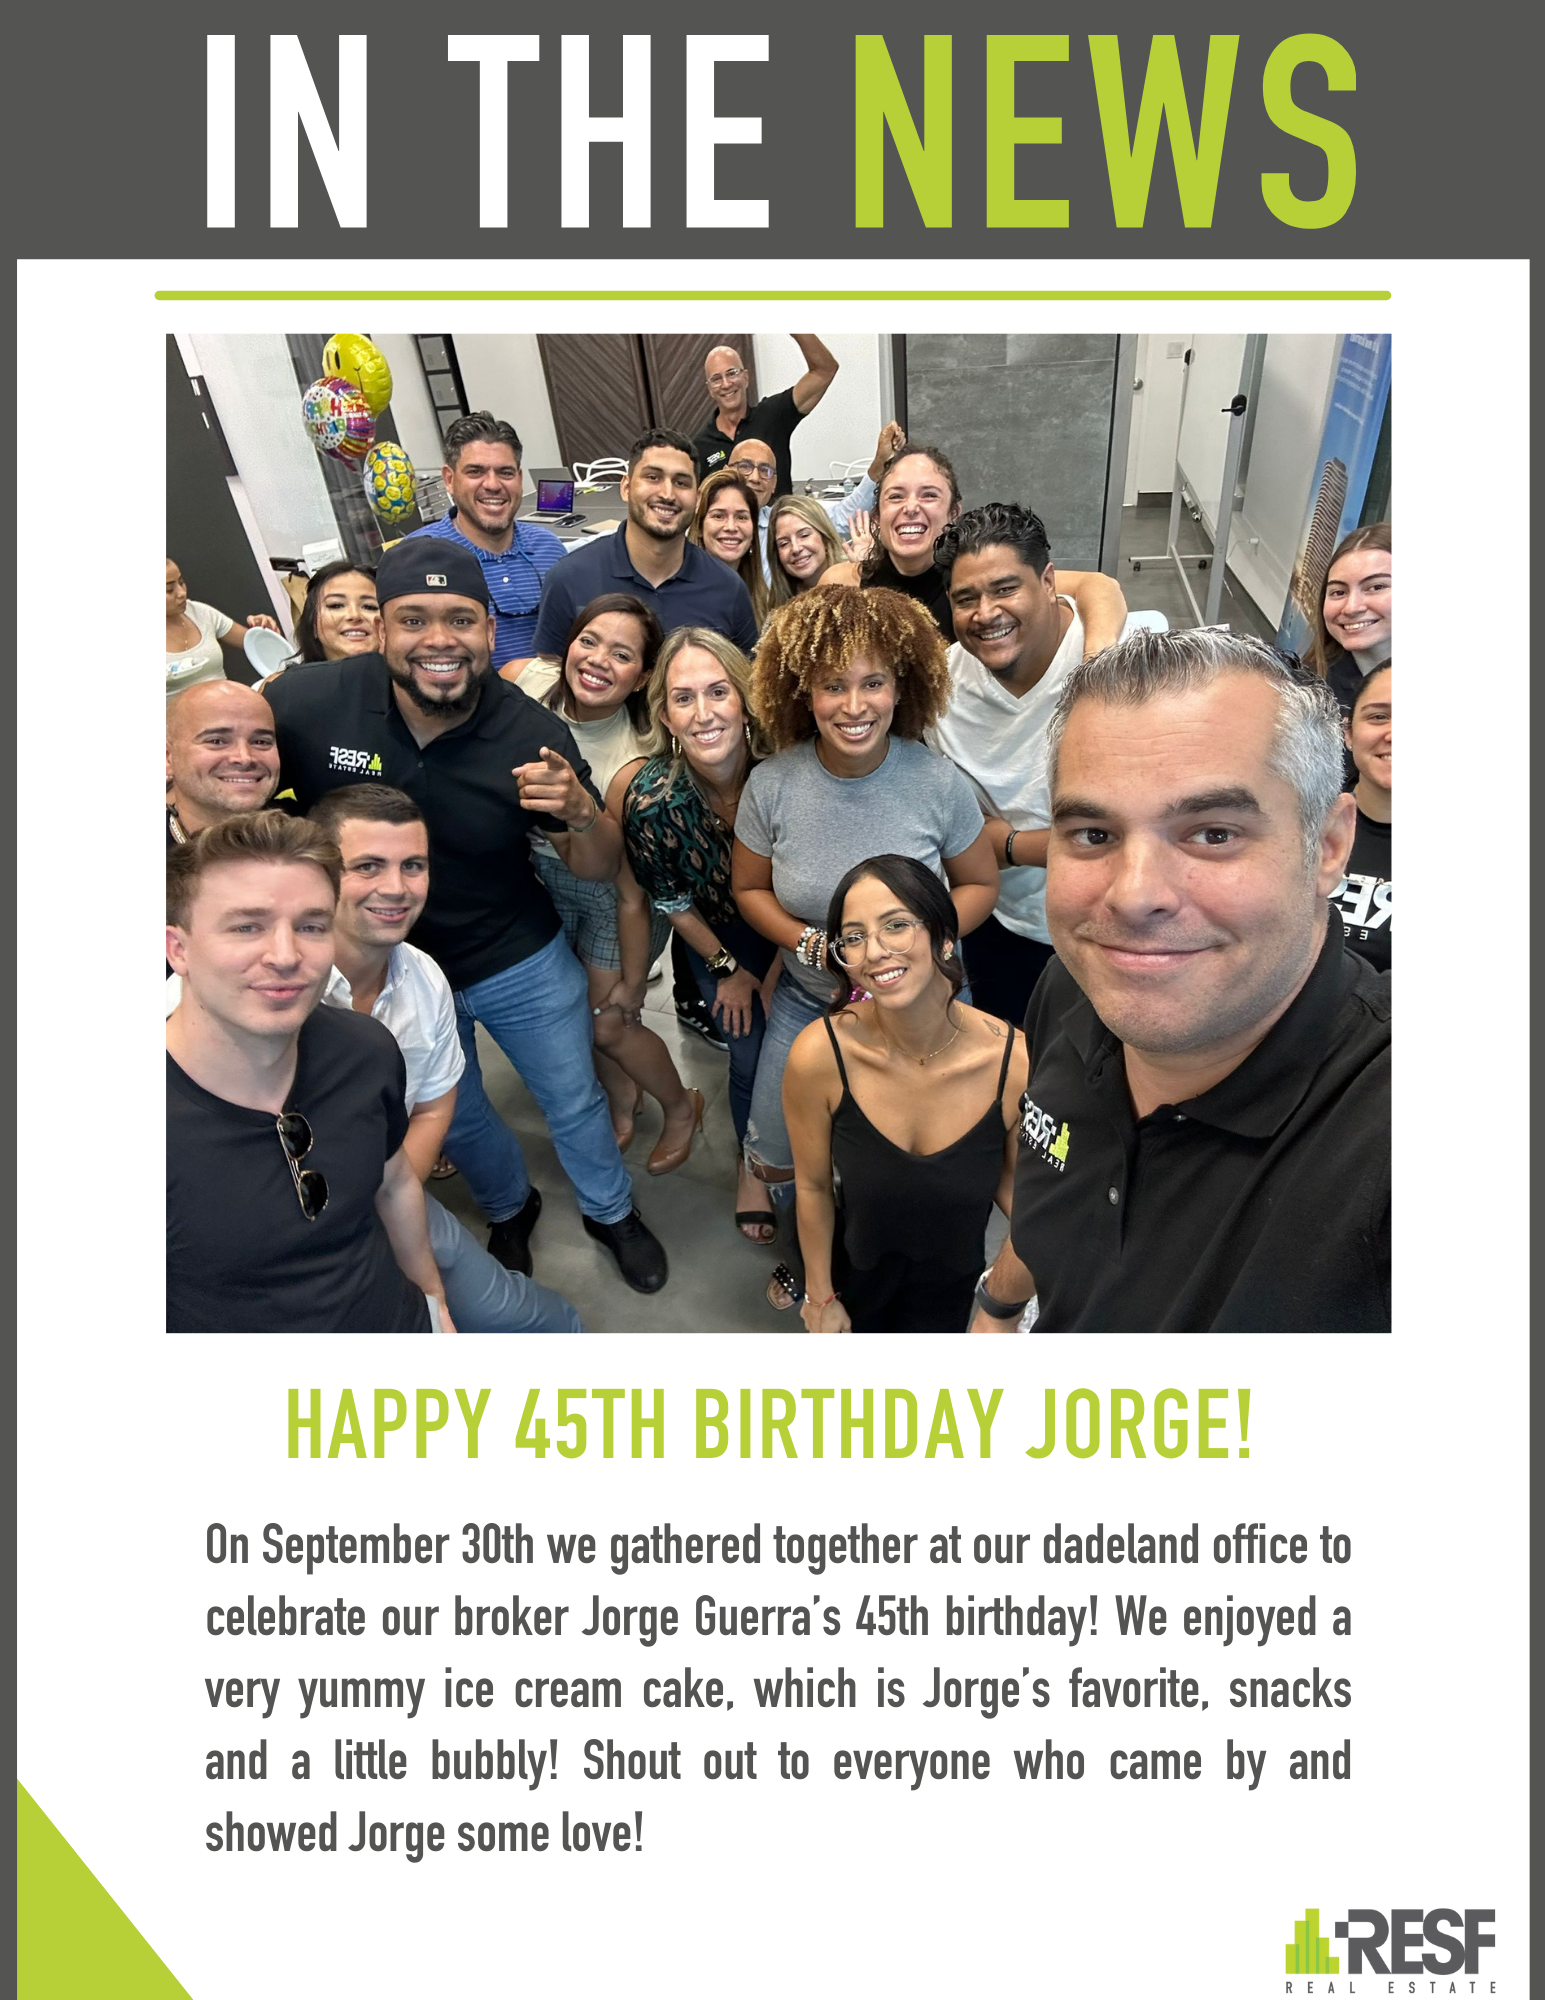 Happy 45th birthday Jorge!